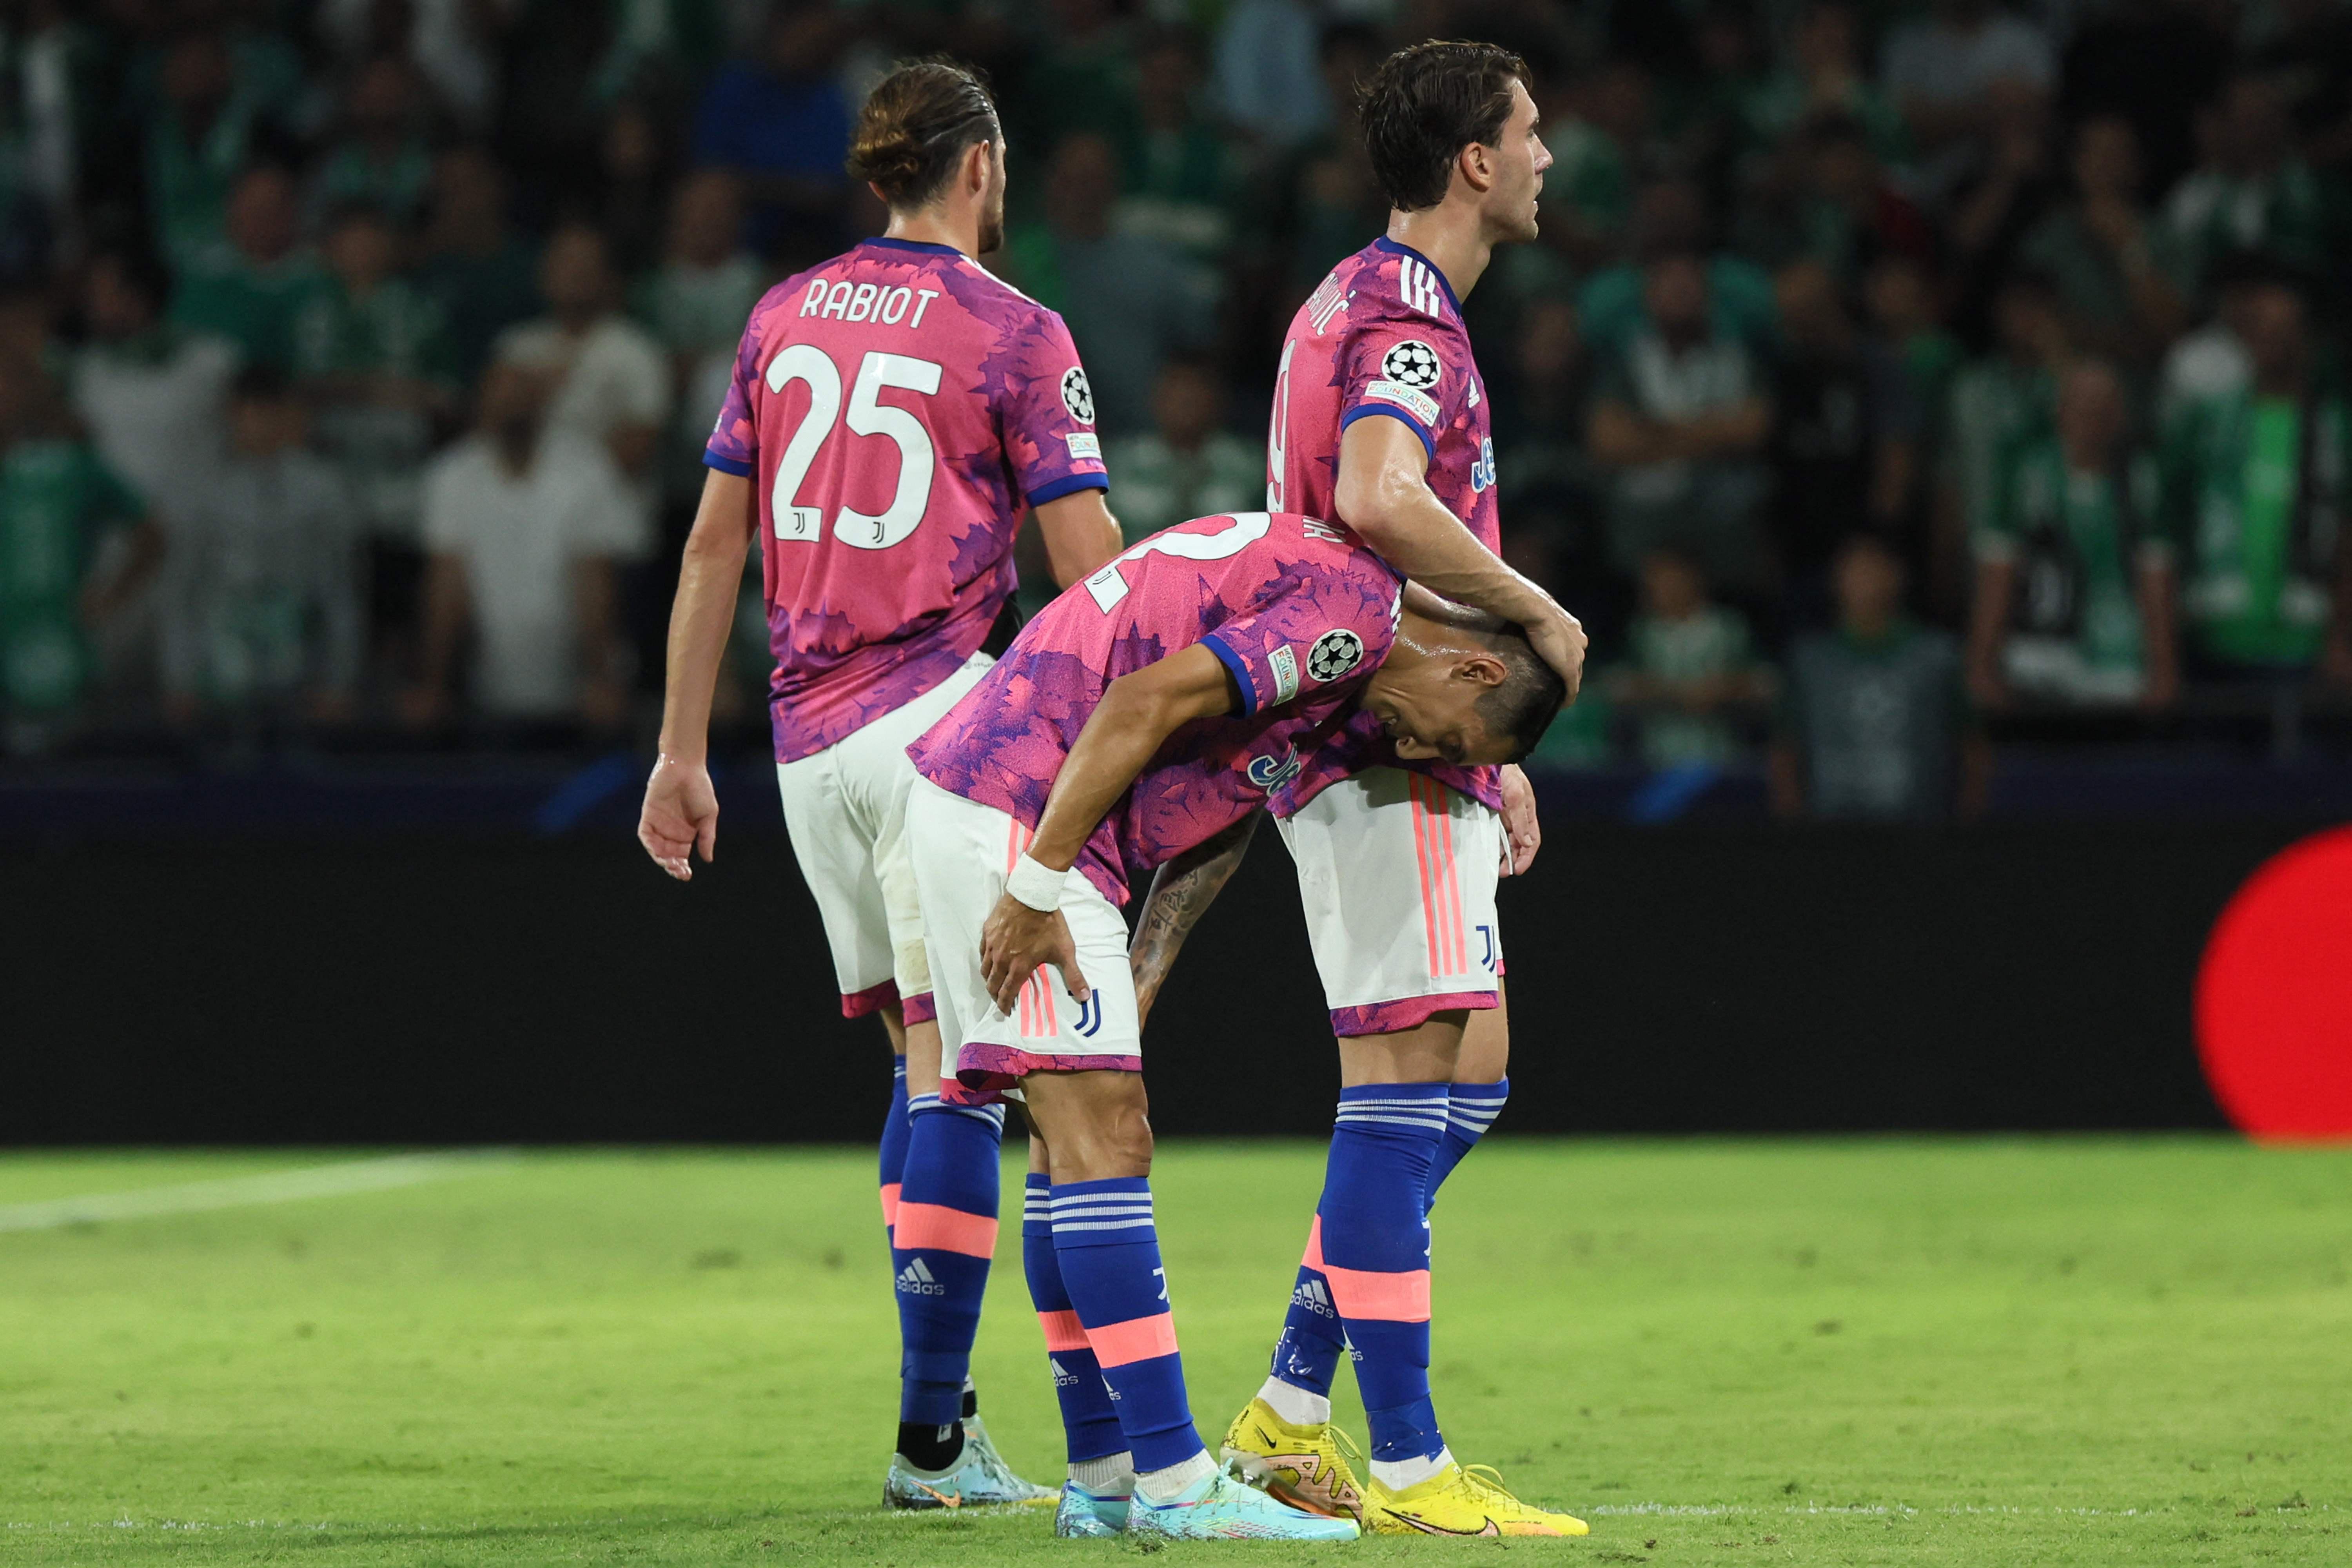 (ÖZET) Maccabi Haifa-Juventus maç sonucu: 2-0